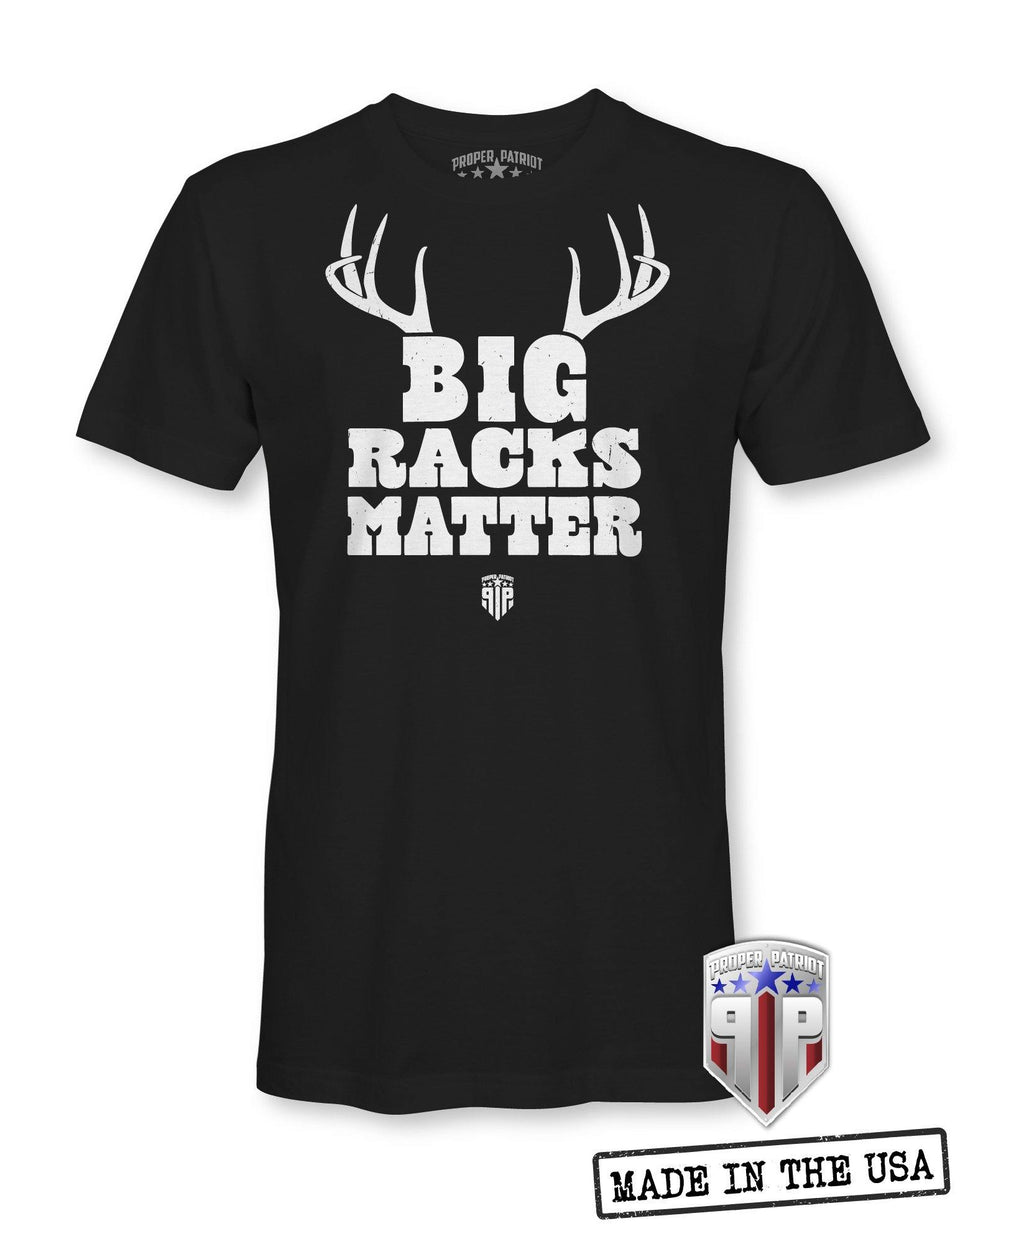 Big Racks Matter - Hunting Season Apparel - Outdoor Shirts - Patriotic Shirts for Men - Proper Patriot